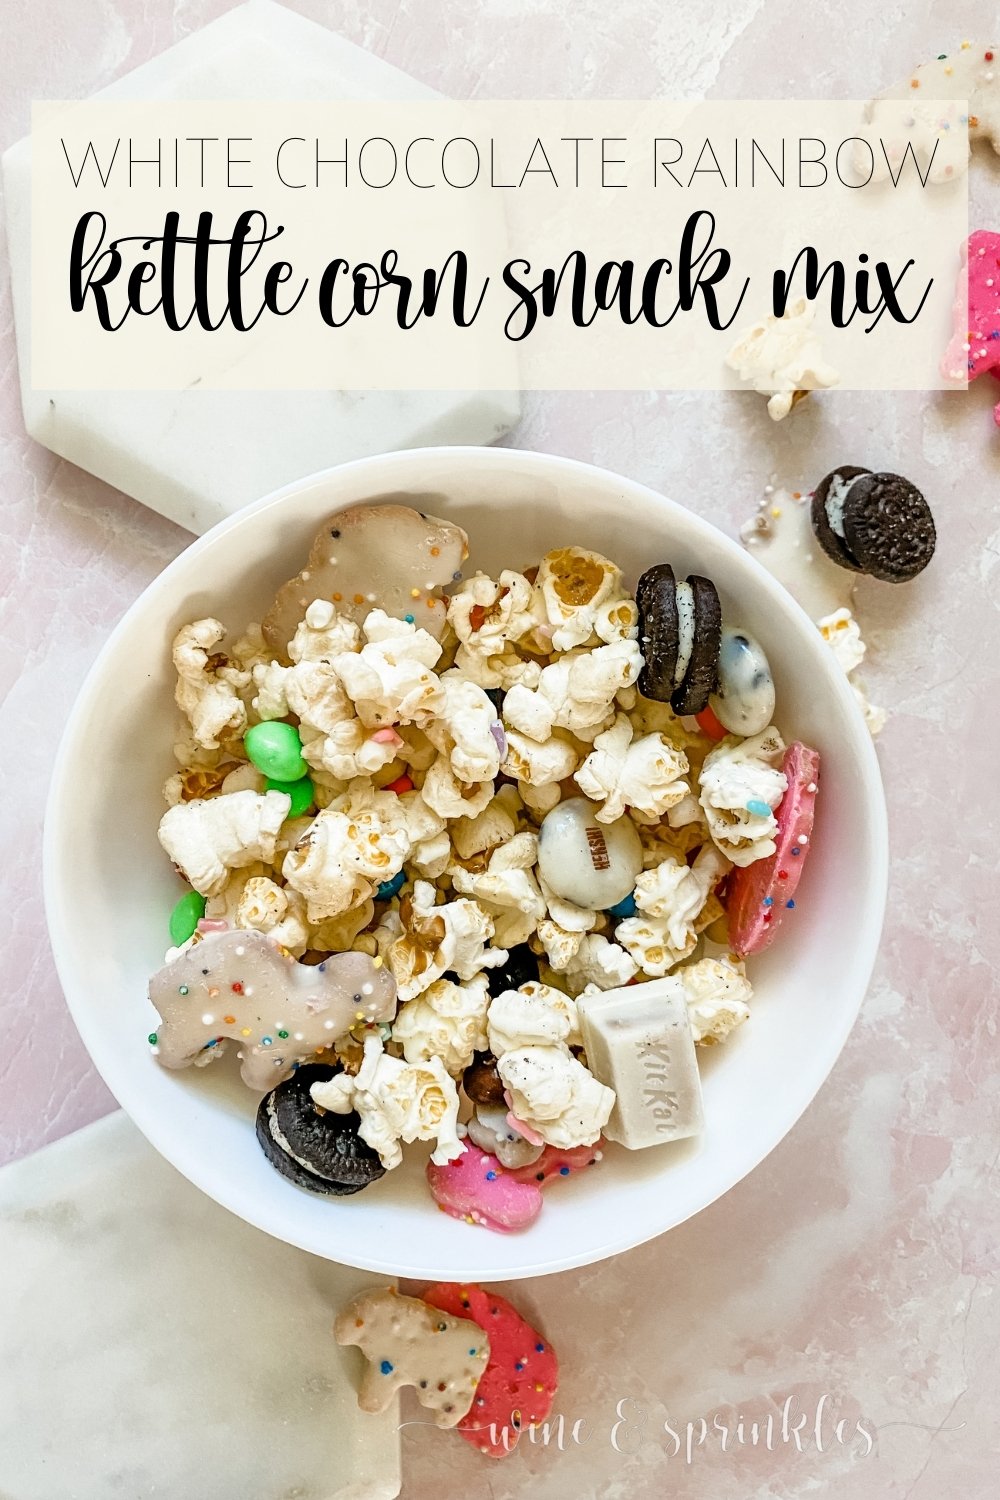 White Chocolate Rainbow Kettle Corn Cookies and Cream Snack Mix